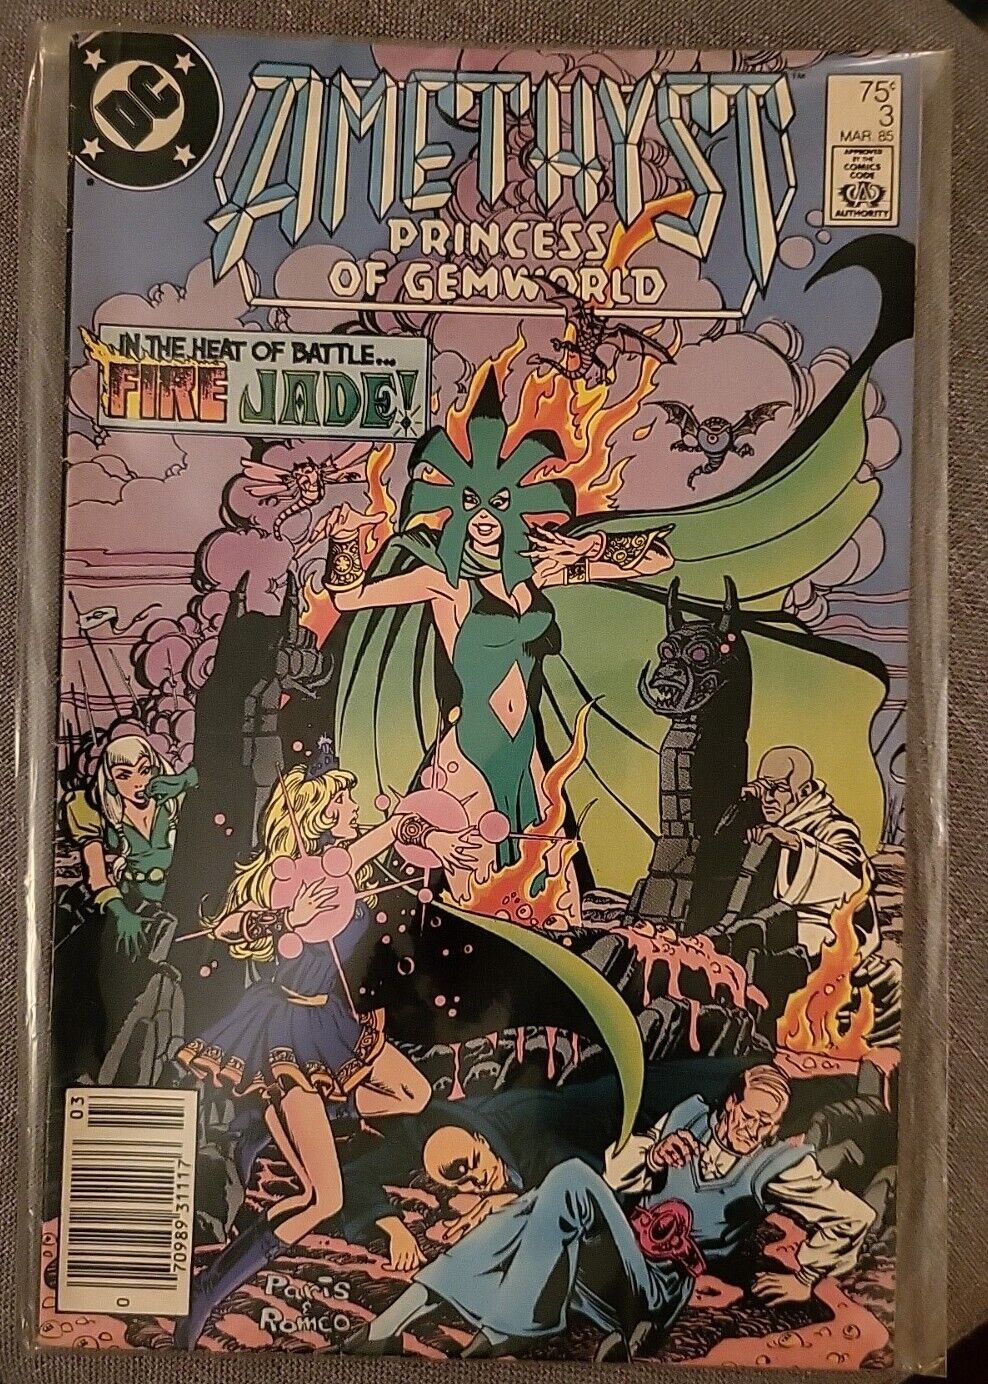 Amethyst Princess of Gemworld #3 DC Comics March 1985 very good condition